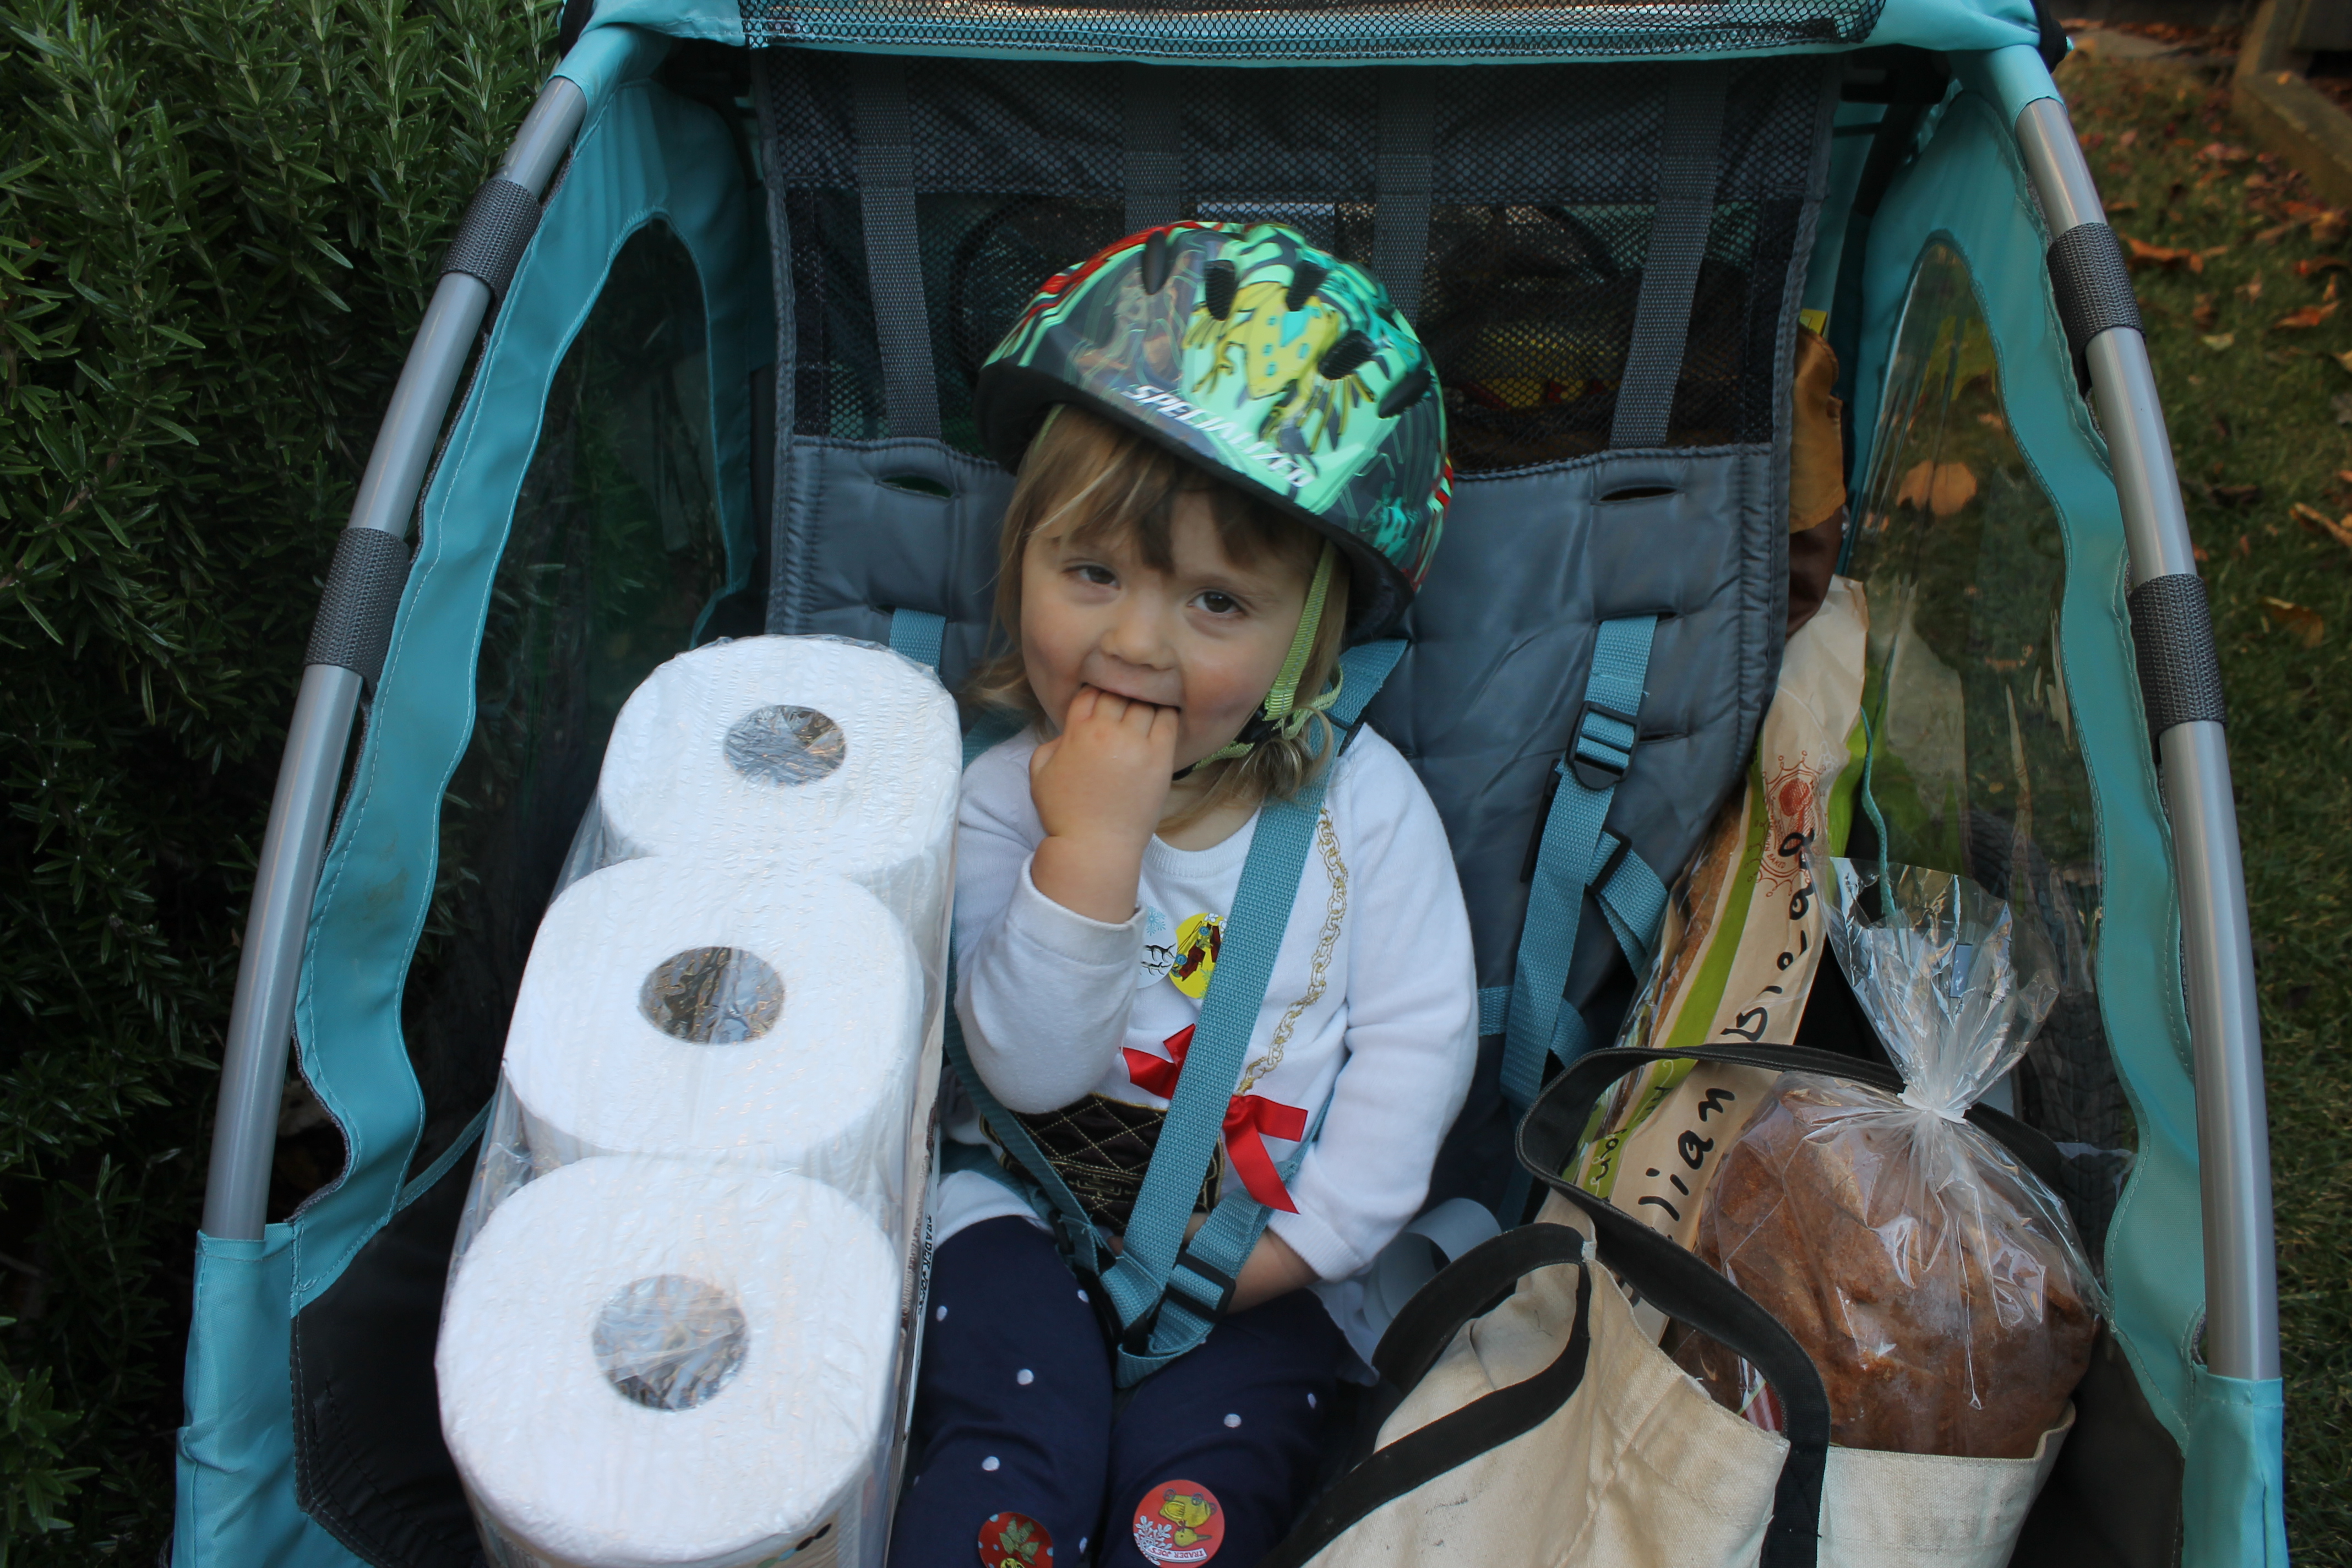 My daughter in her bike trailer